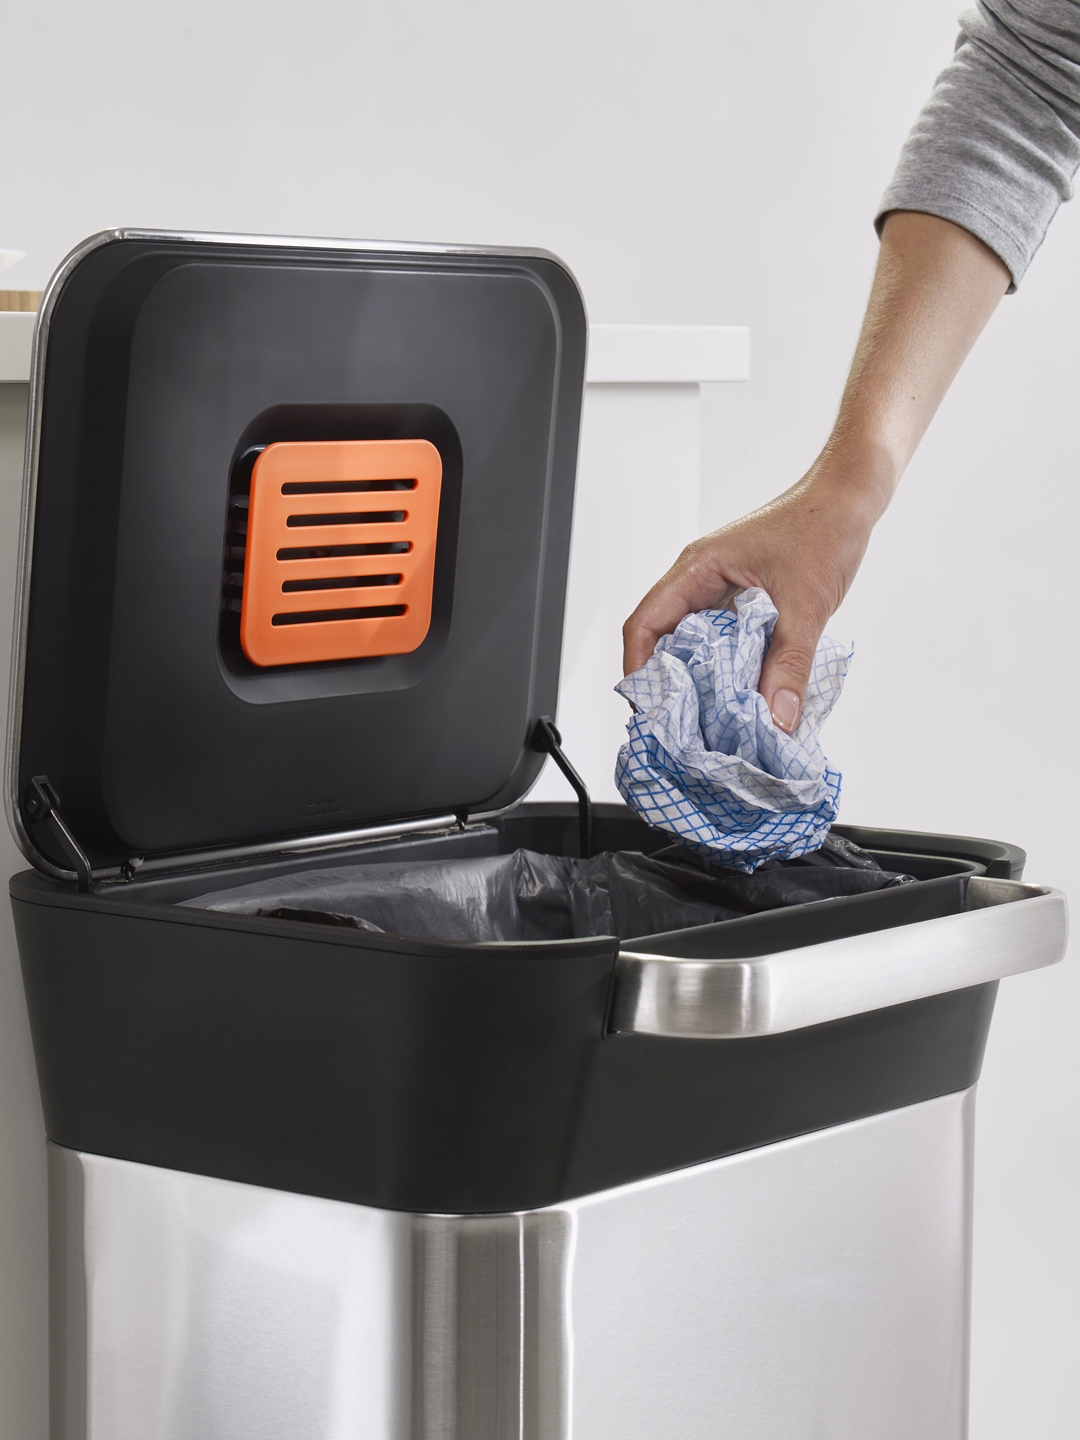 Joseph Joseph Intelligent Waste Titan Trash Can Compactor with